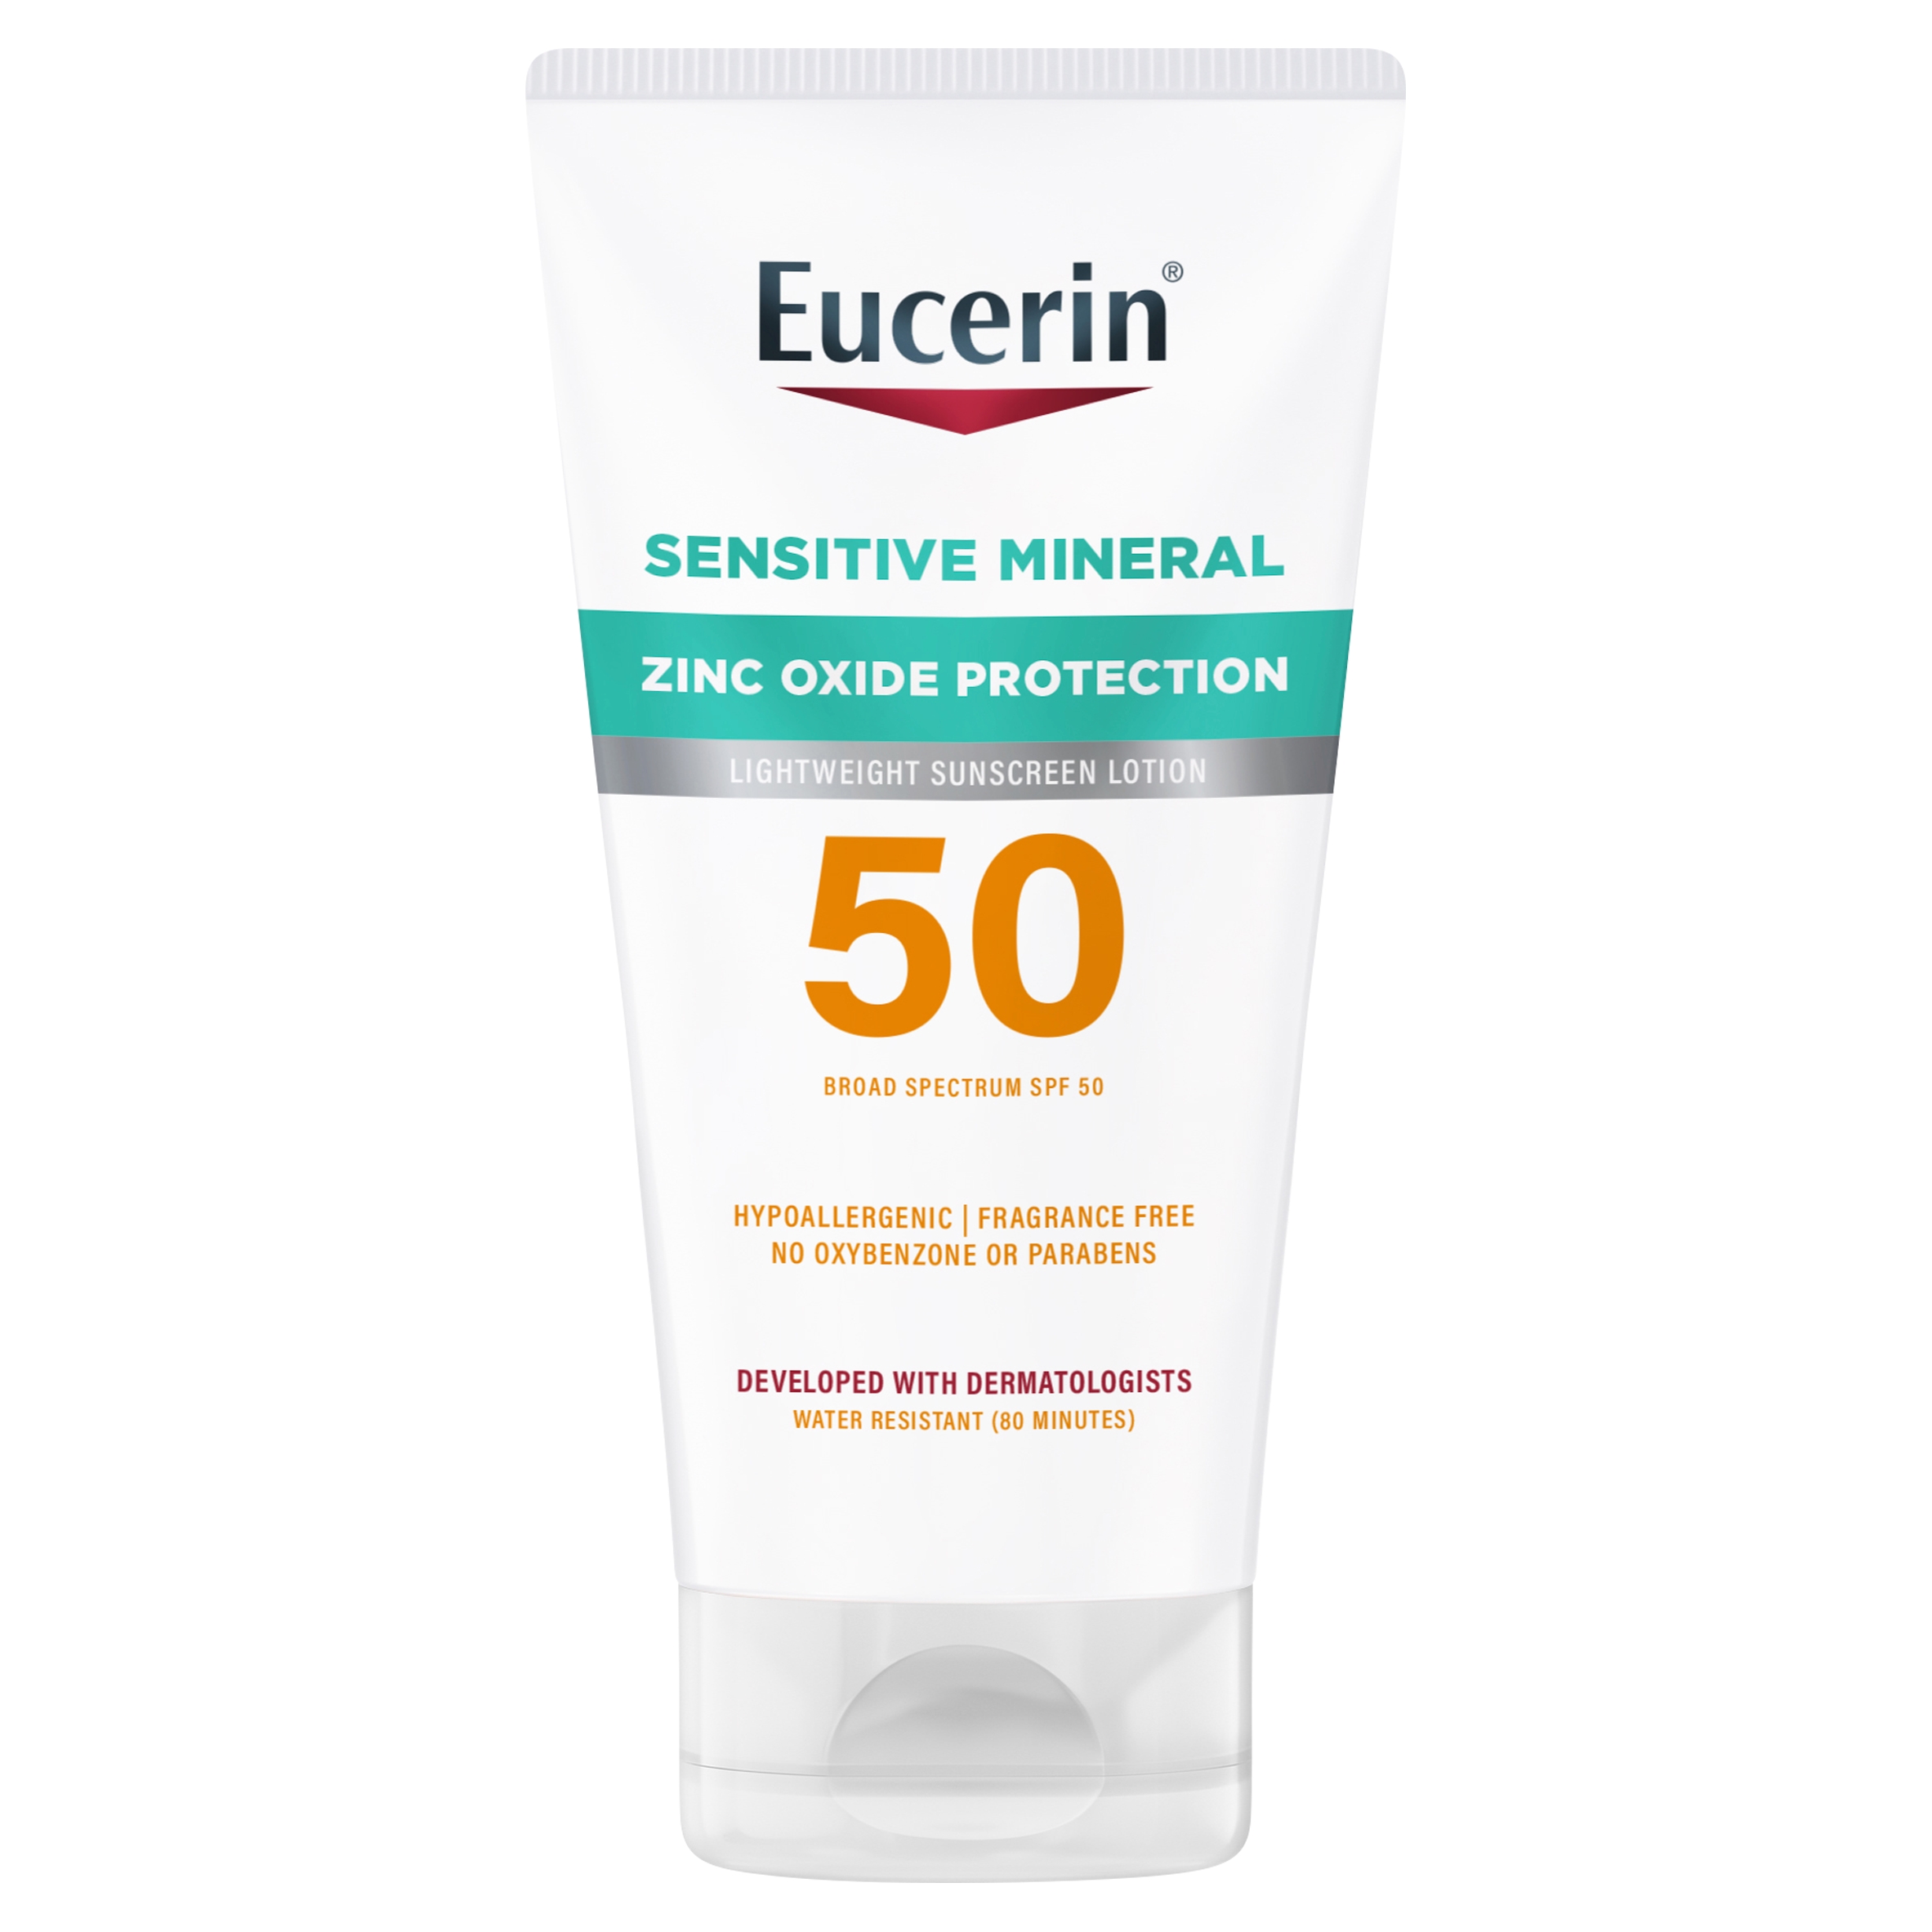 Eucerin Sensitive Mineral Broad Spectrum Lightweight Sunscreen Lotion, SPF 50, 4 fl oz - image 1 of 13